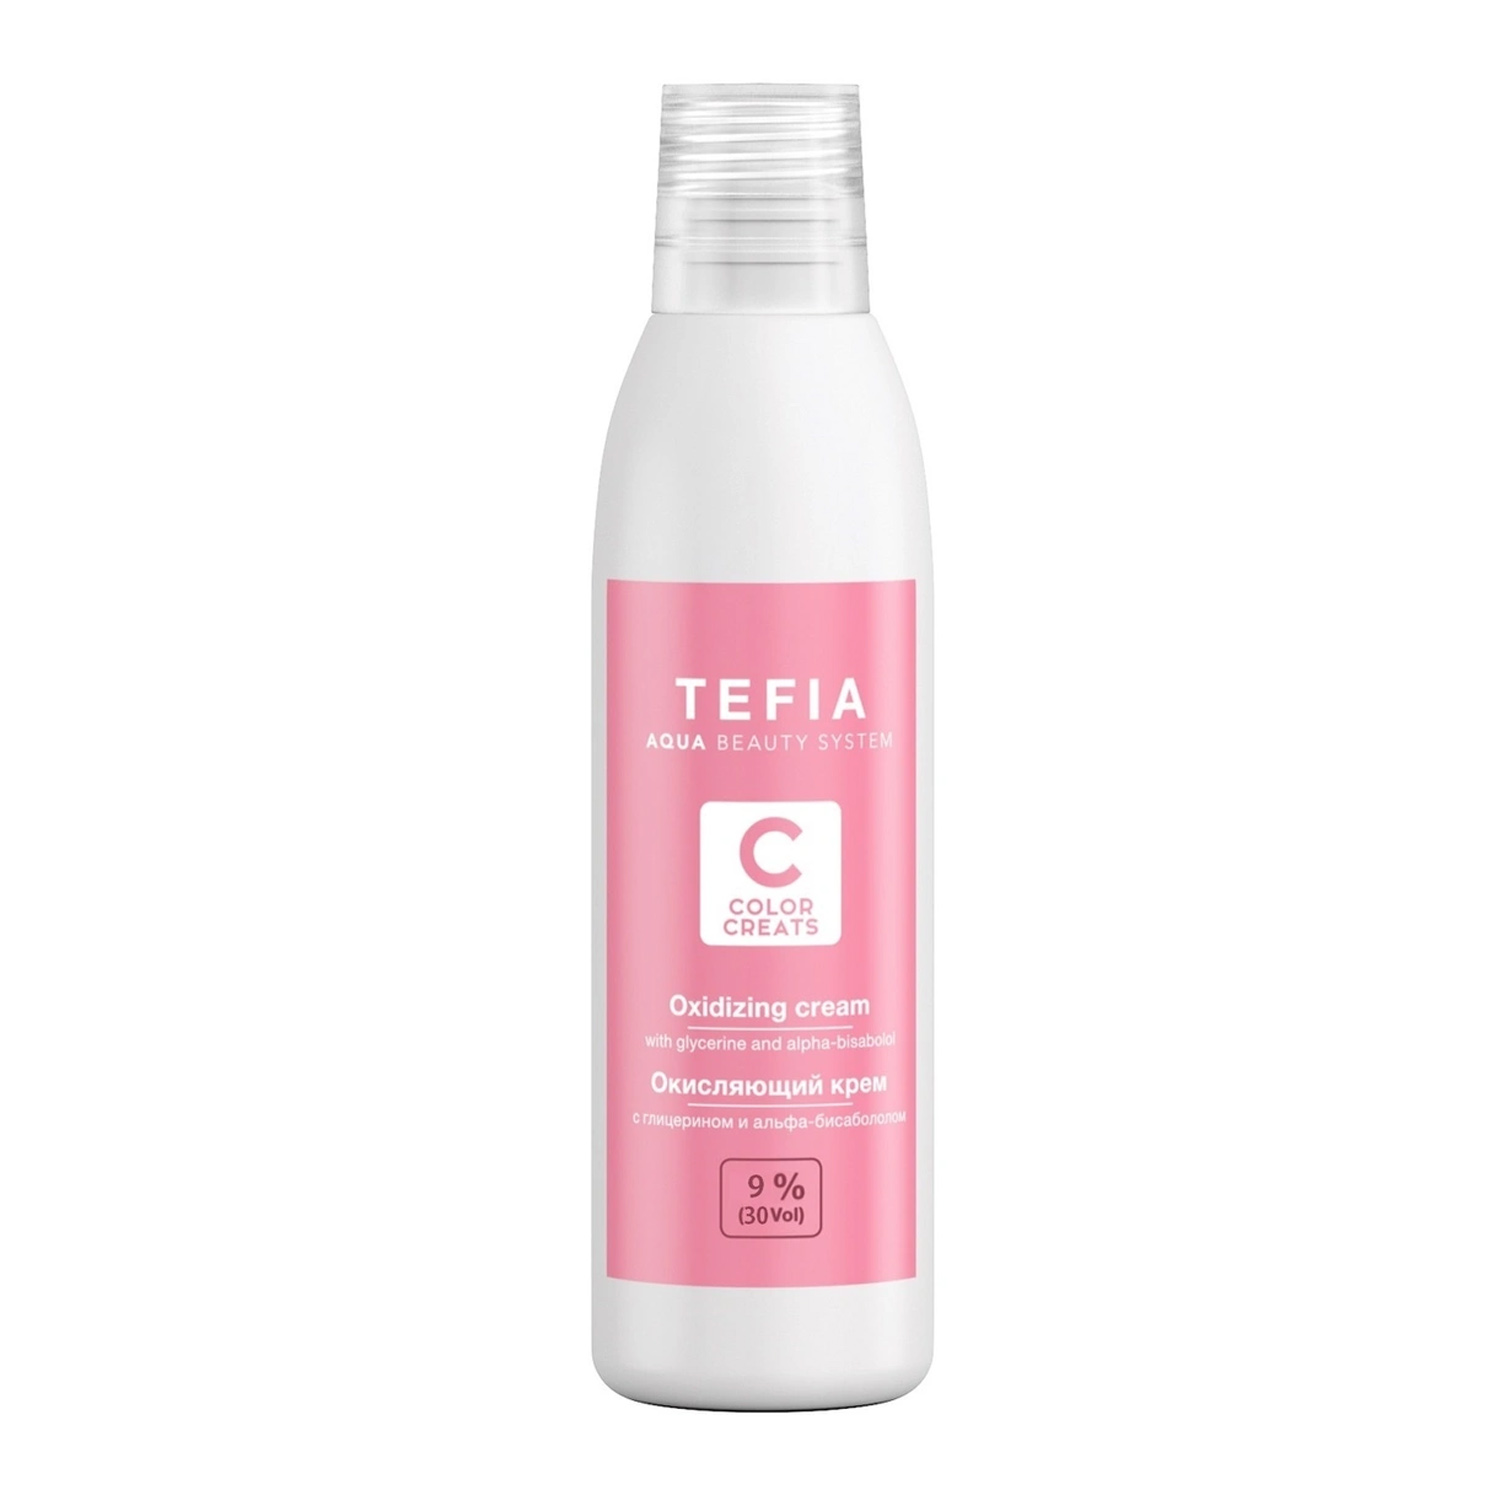 Tefia Окисляющий крем с глицерином и альфа-бисабололом 9% vol. 30, 120 мл (Tefia, Color Creats) цена и фото